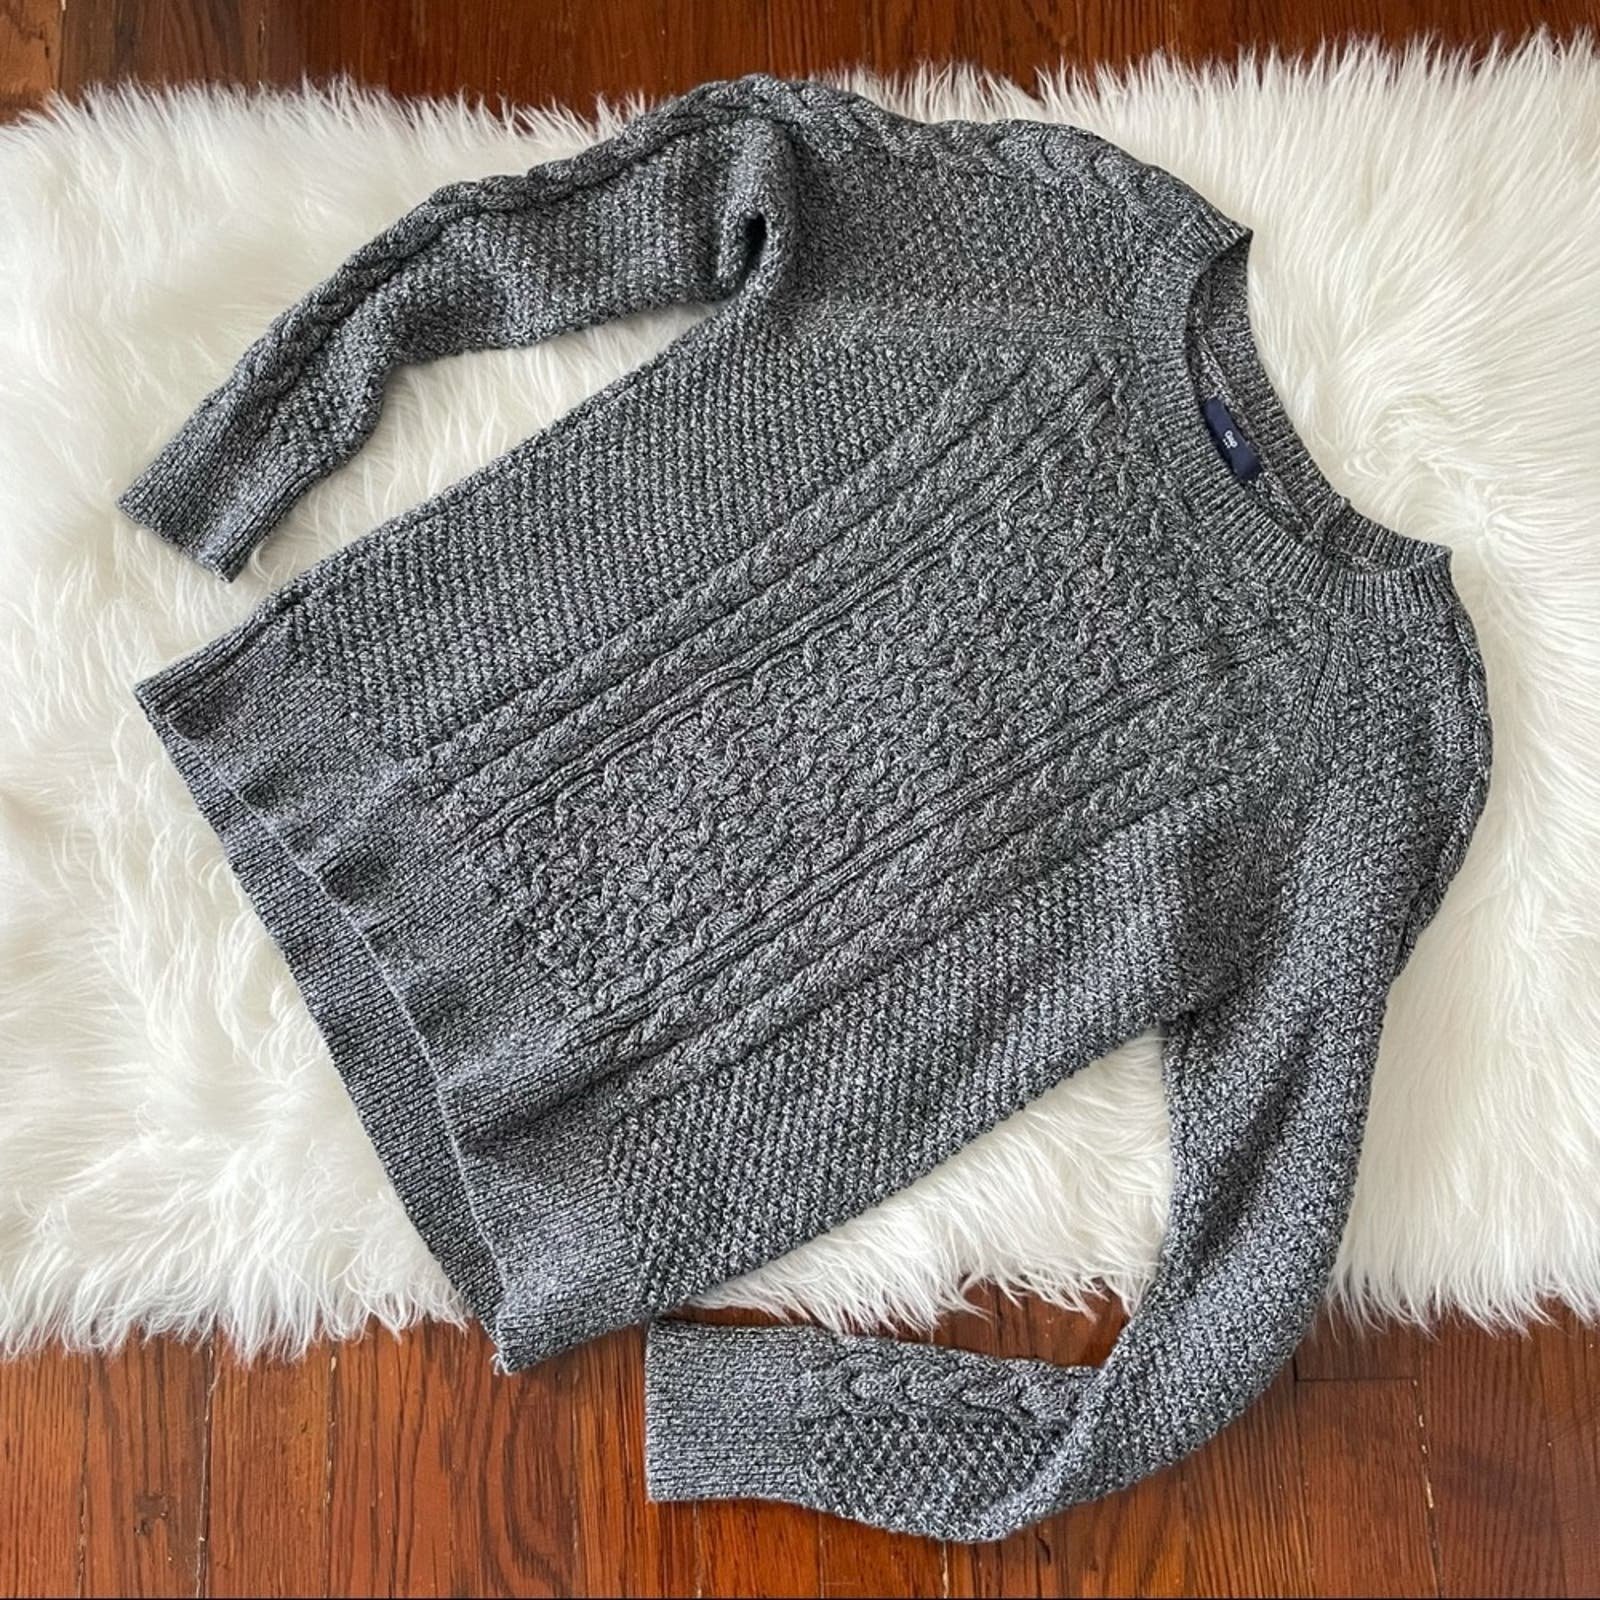 Simple GAP Heather Black Charcoal Sweater Basic Size Medium IZDenF6mg Hot Sale